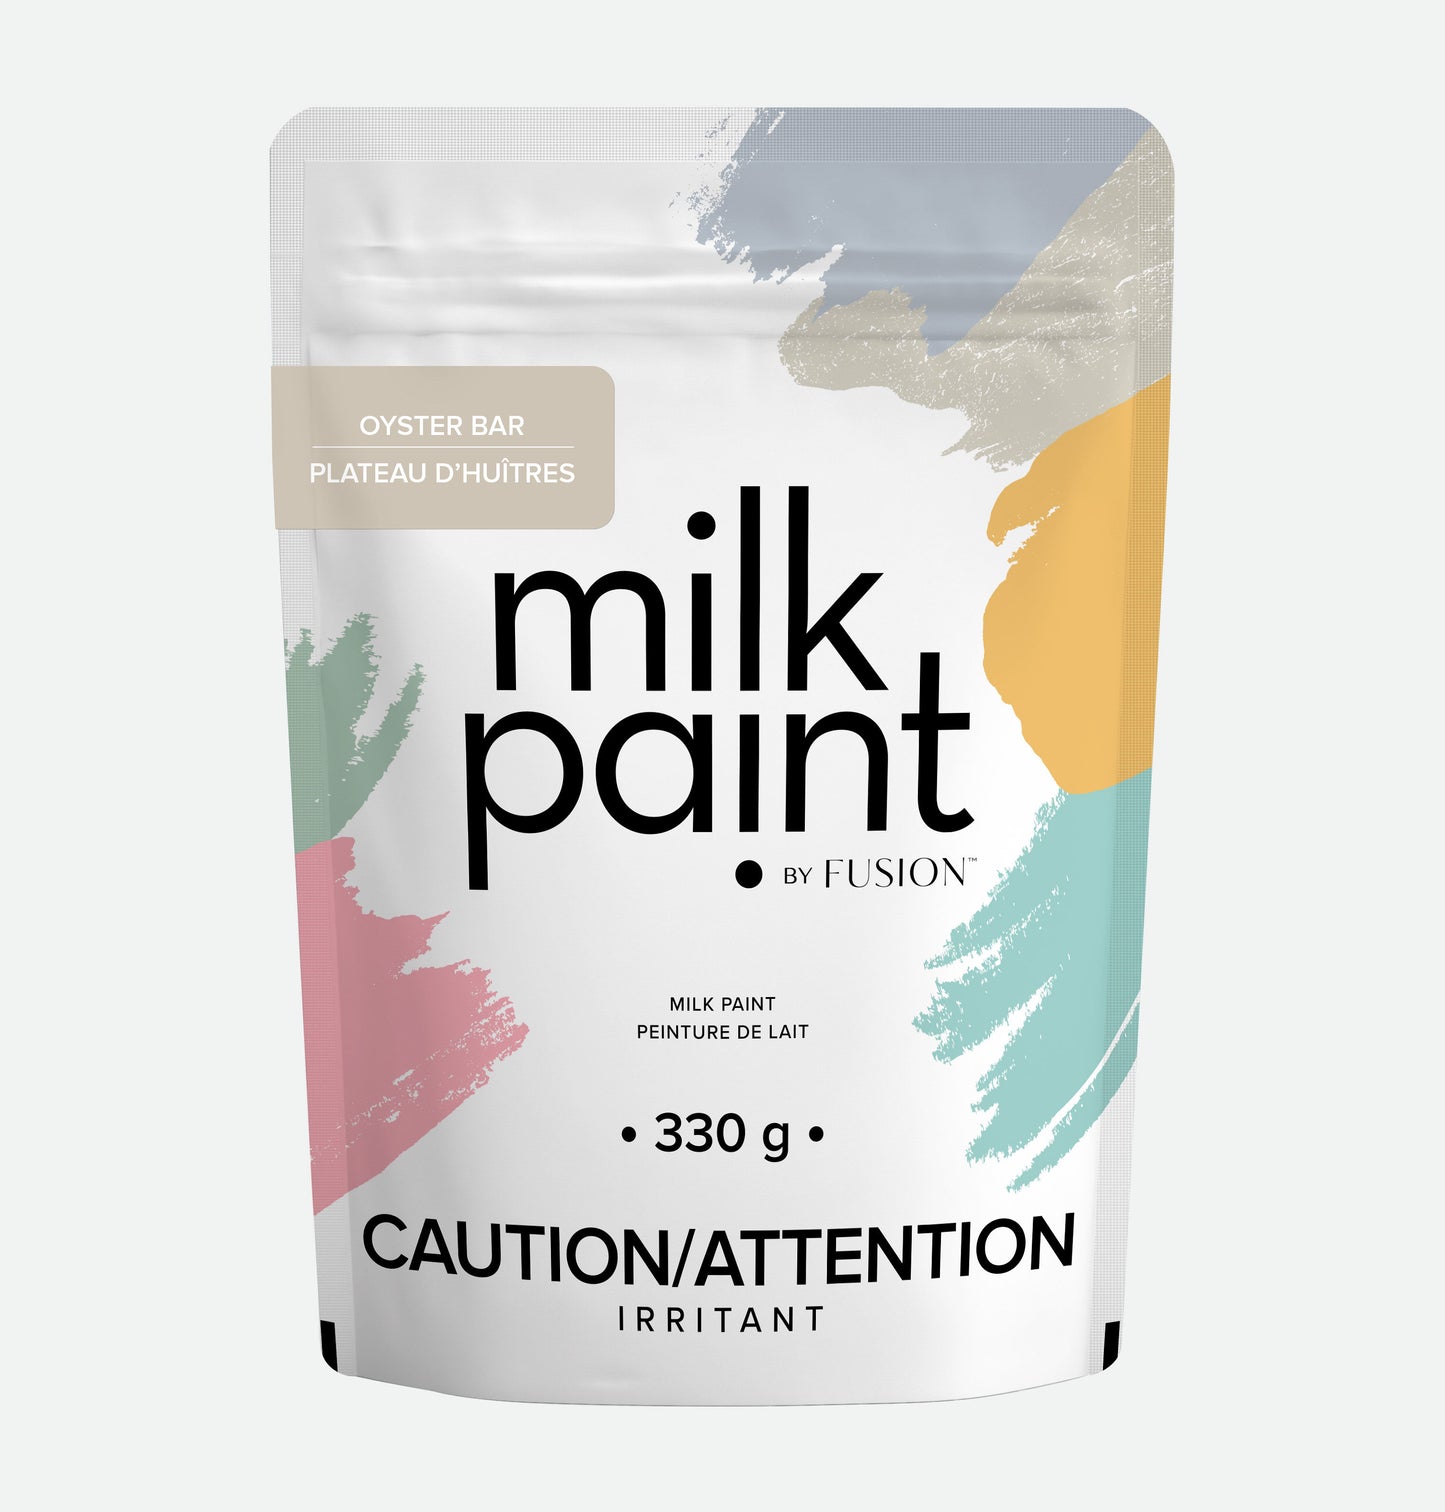 Fusion Milk Paint OYSTER BAR